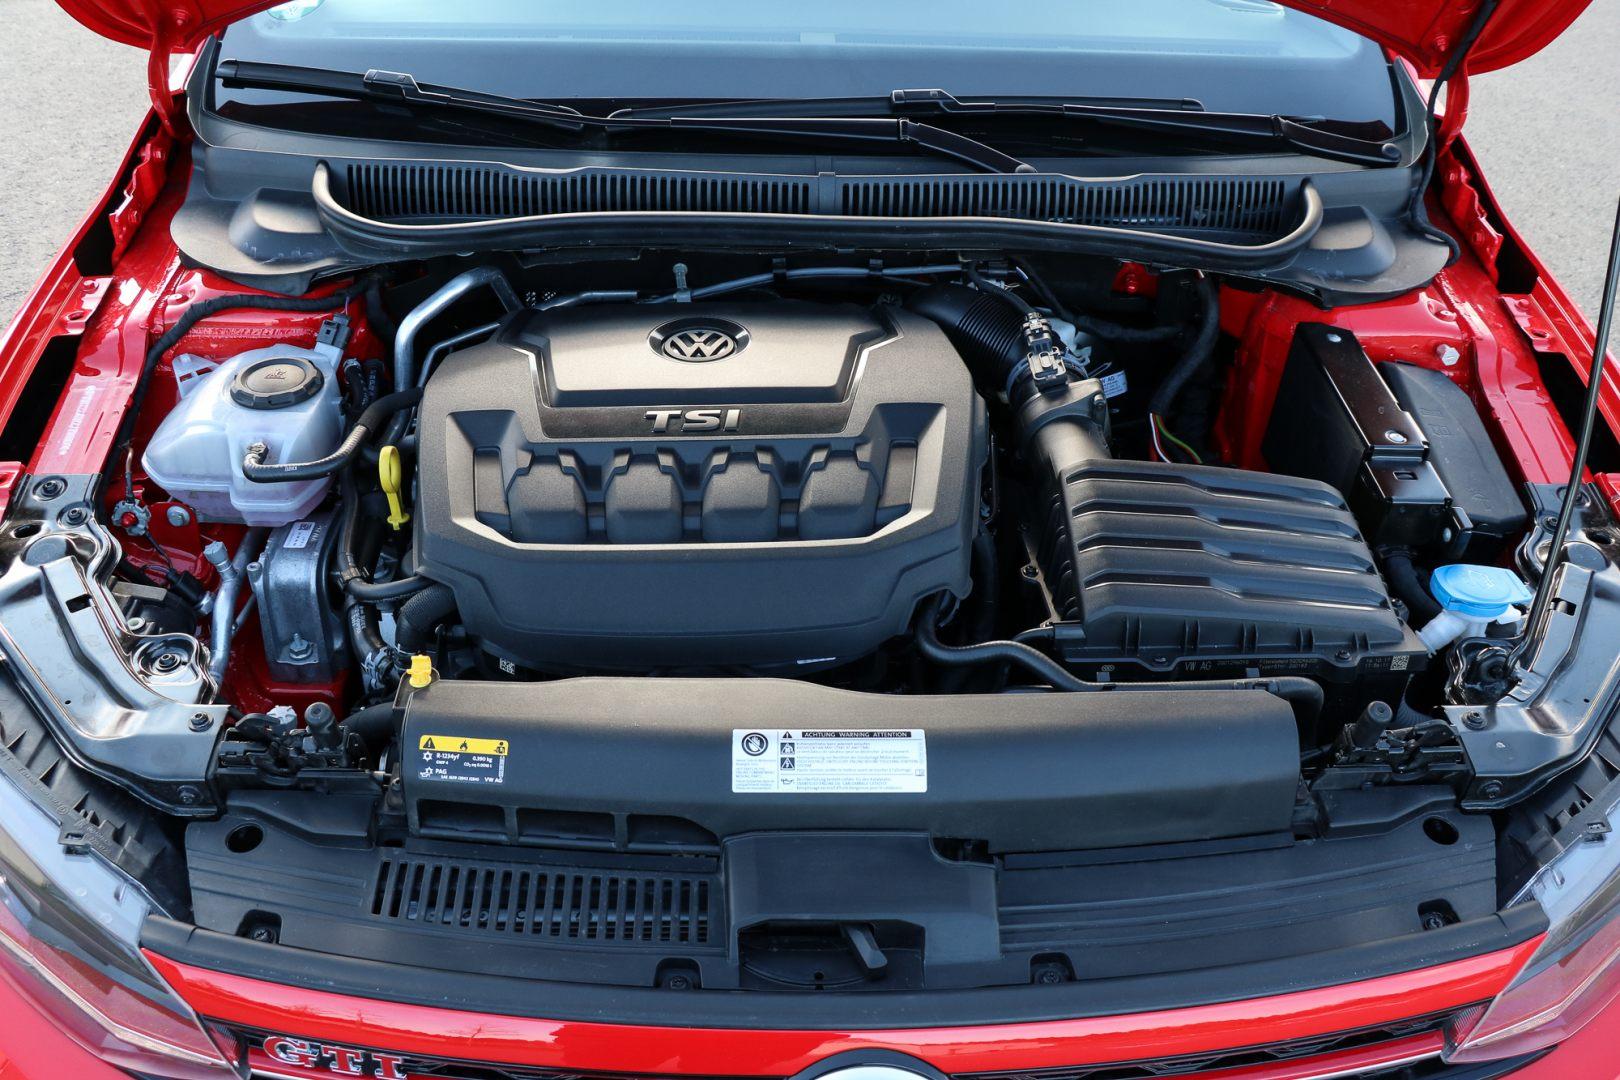 2018 VW Polo GTI - EA288 2.0 Liter Motor mit 200 PS!